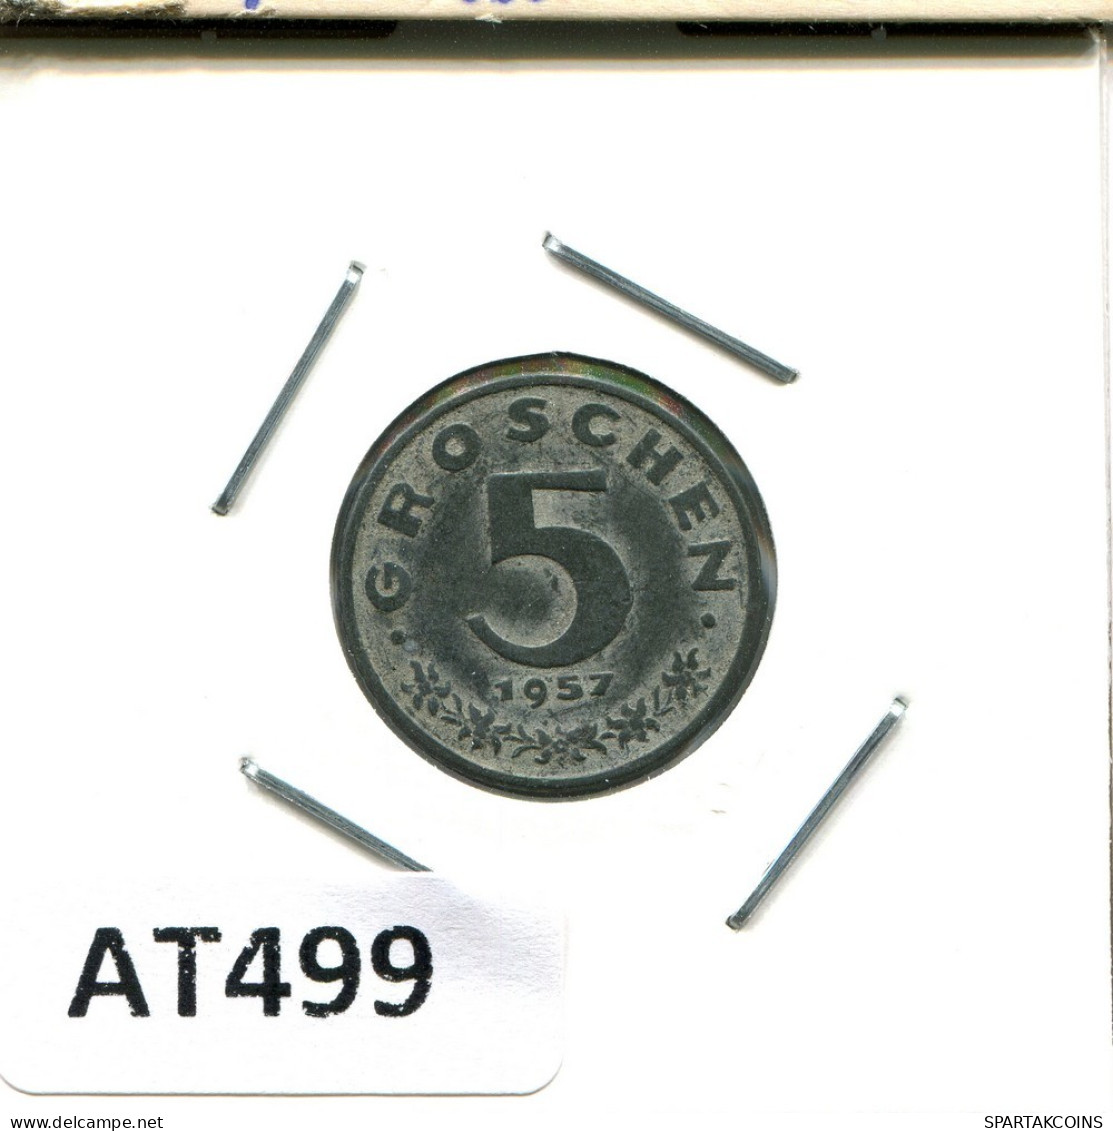 5 GROSCHEN 1957 AUSTRIA Coin #AT499.U.A - Autriche